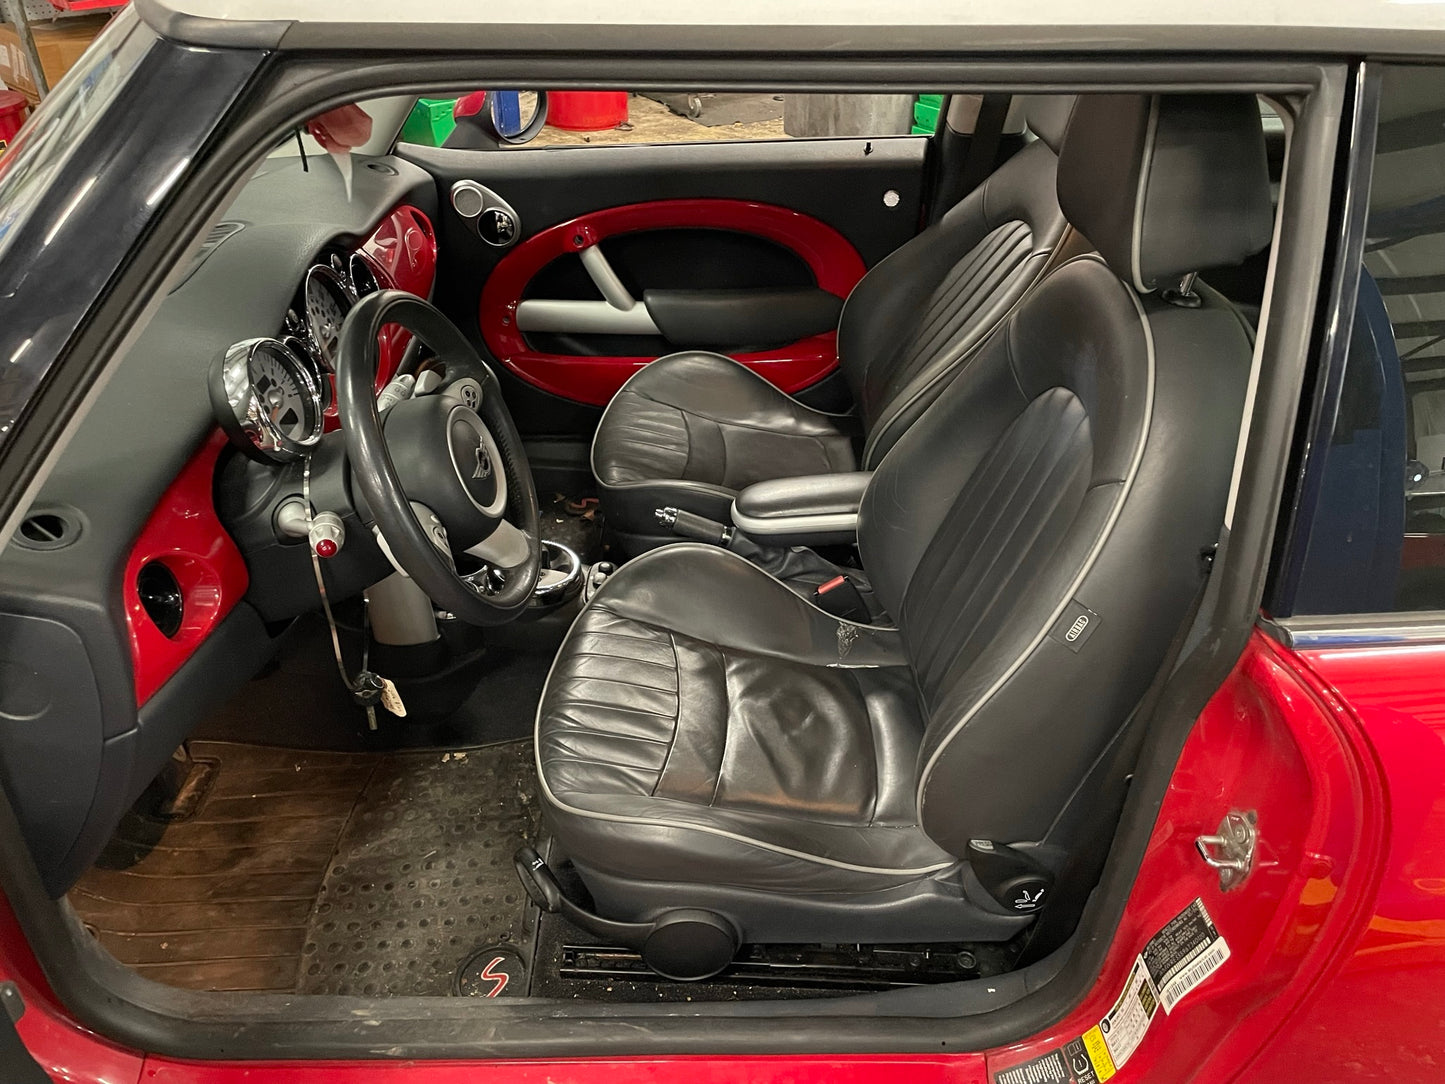 2006 MINI Cooper Hatchback S, New Parts Car (May 2022) Stk # 300